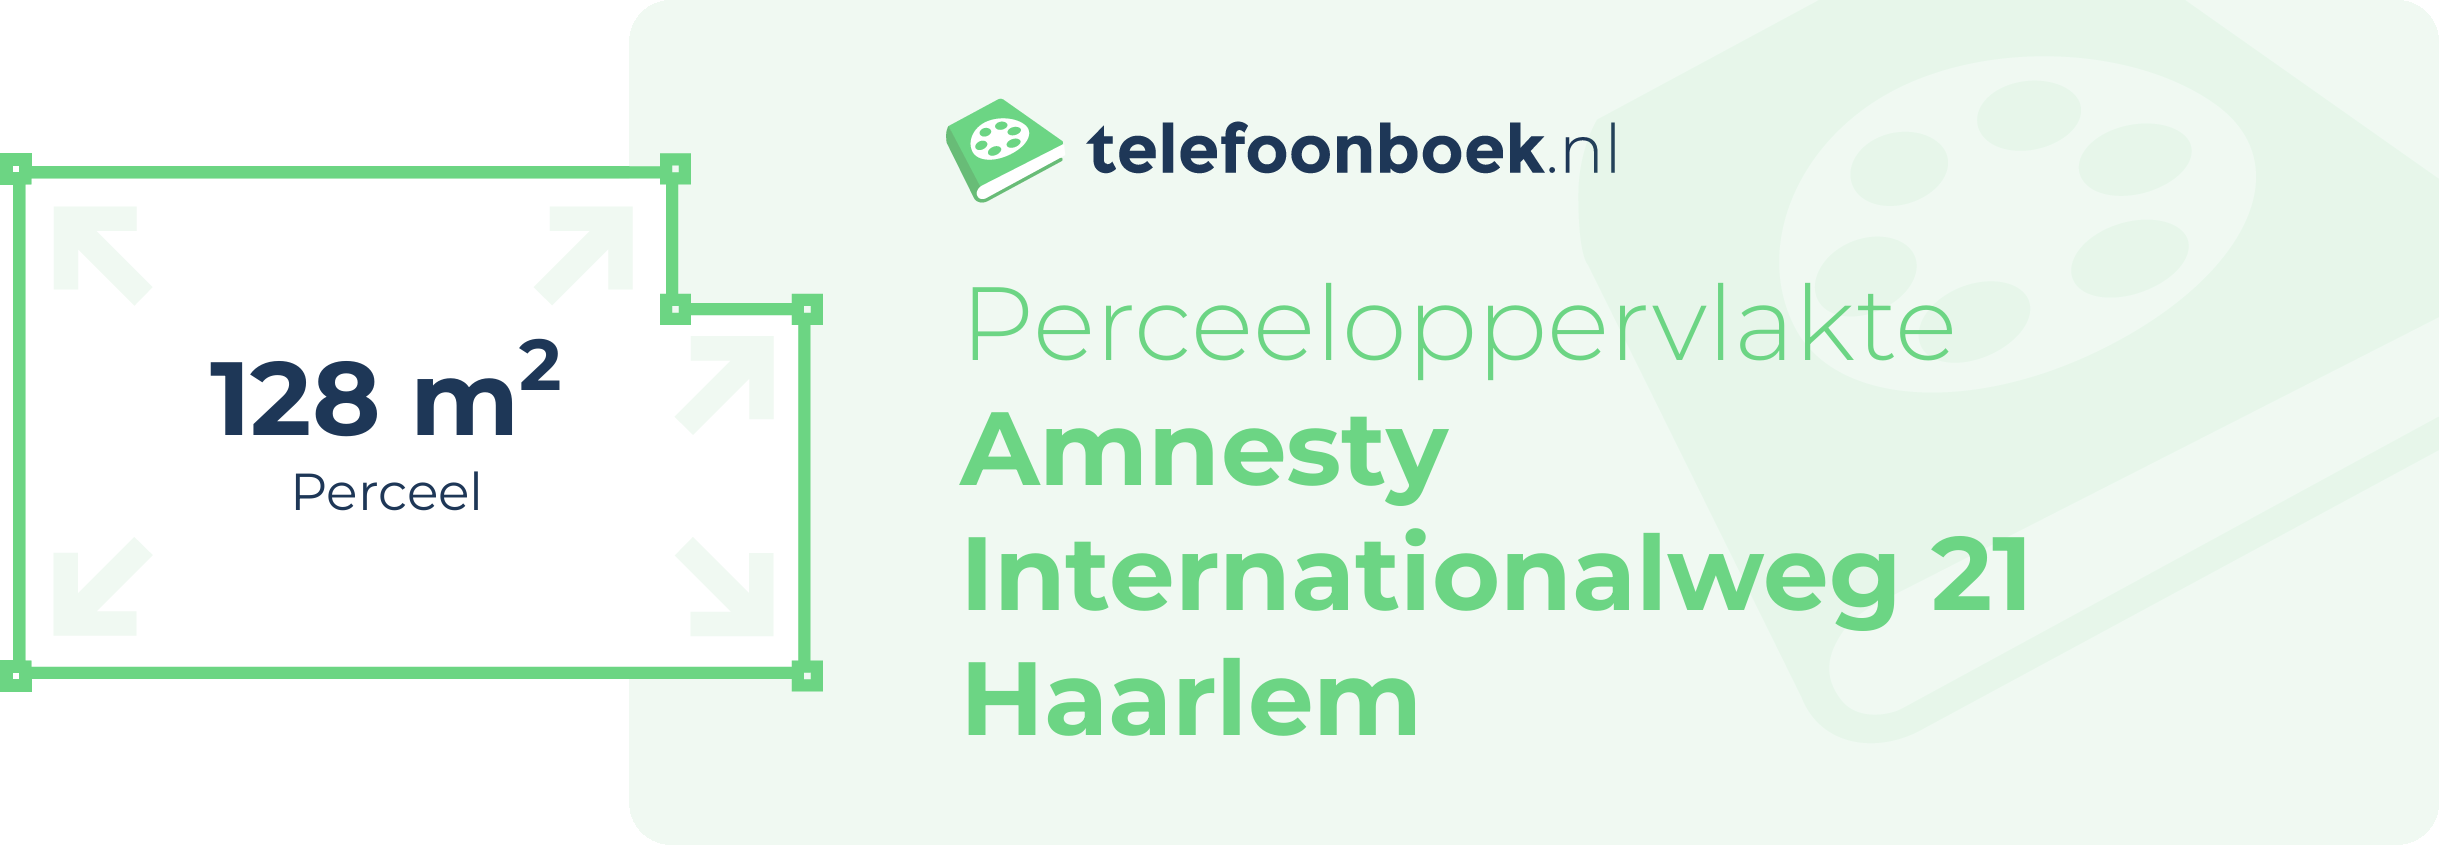 Perceeloppervlakte Amnesty Internationalweg 21 Haarlem